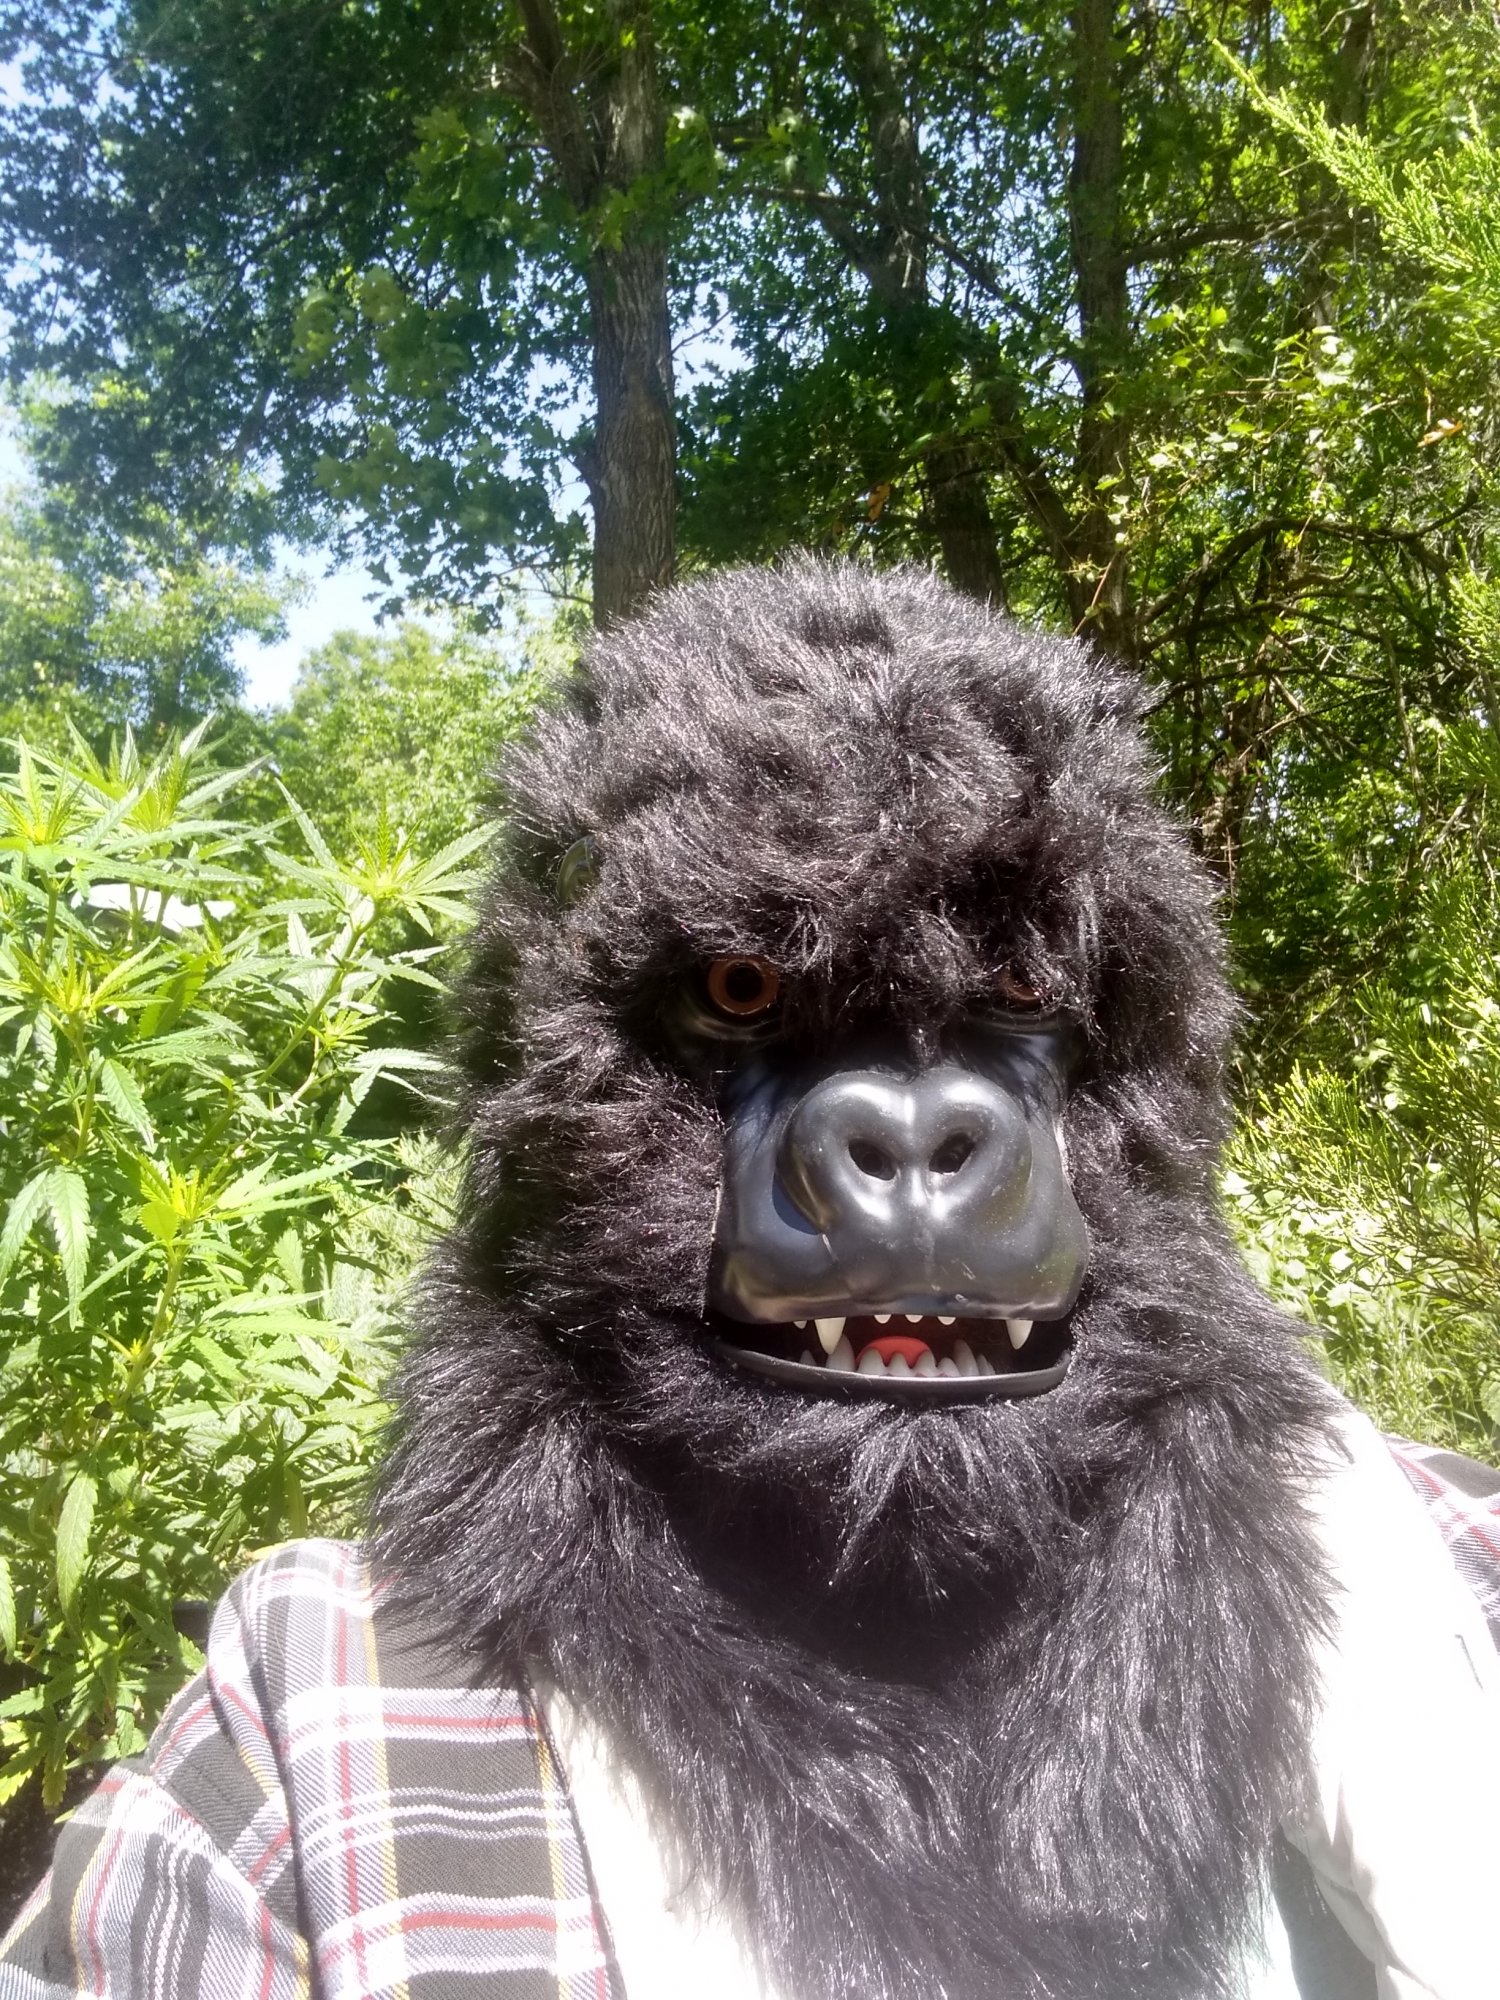 The diary of a gorilla hobbyist